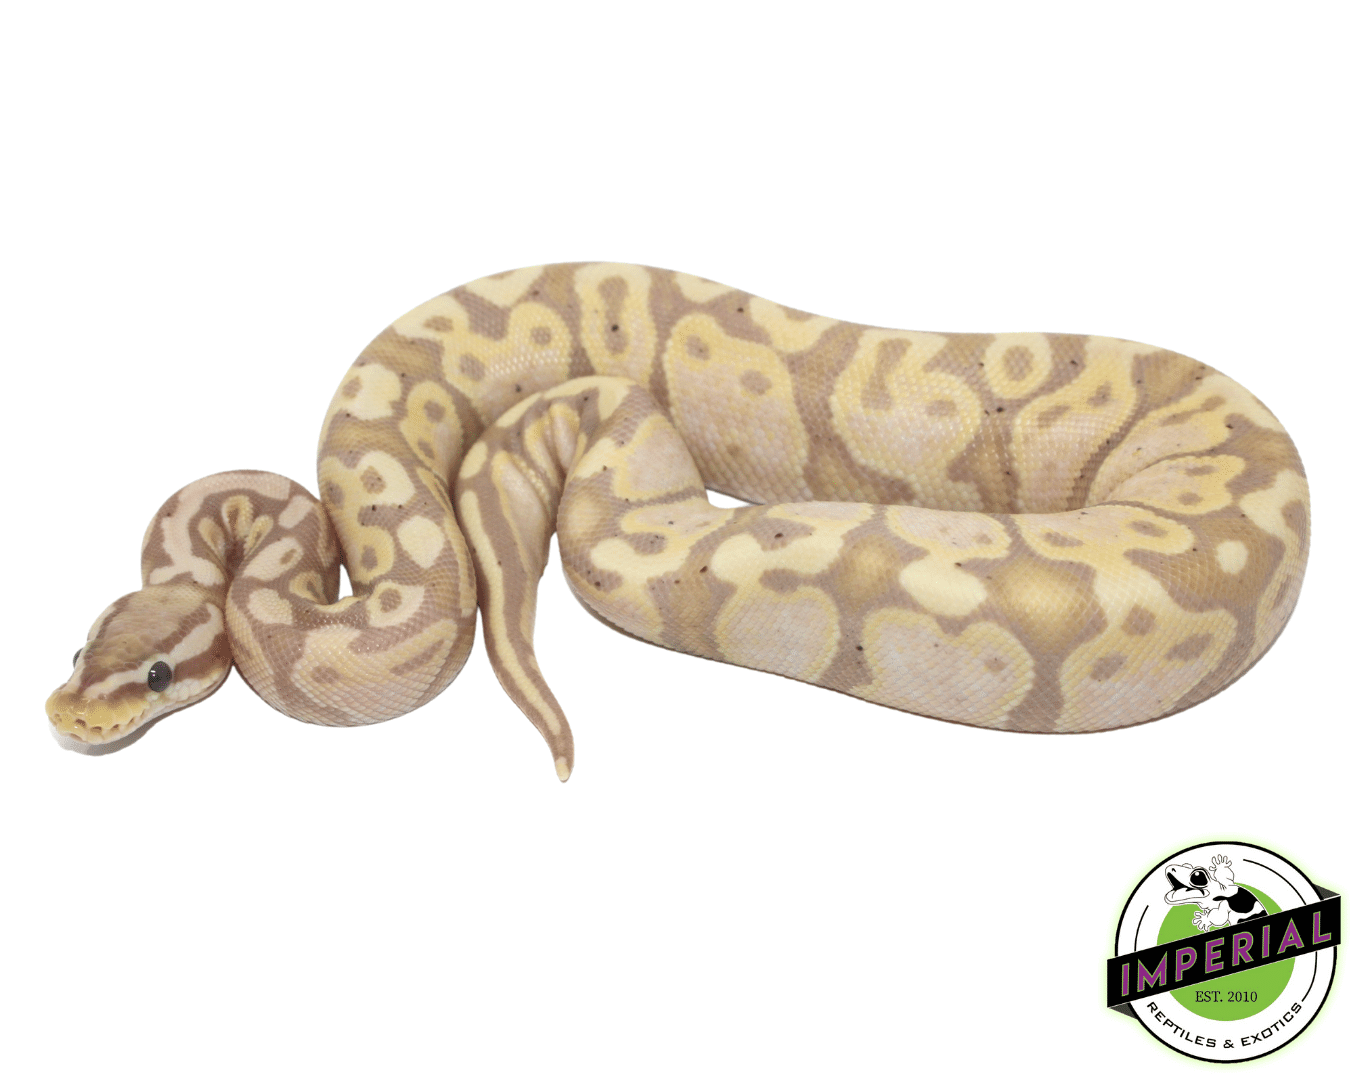 banana pastel ball python for sale, buy reptiles online